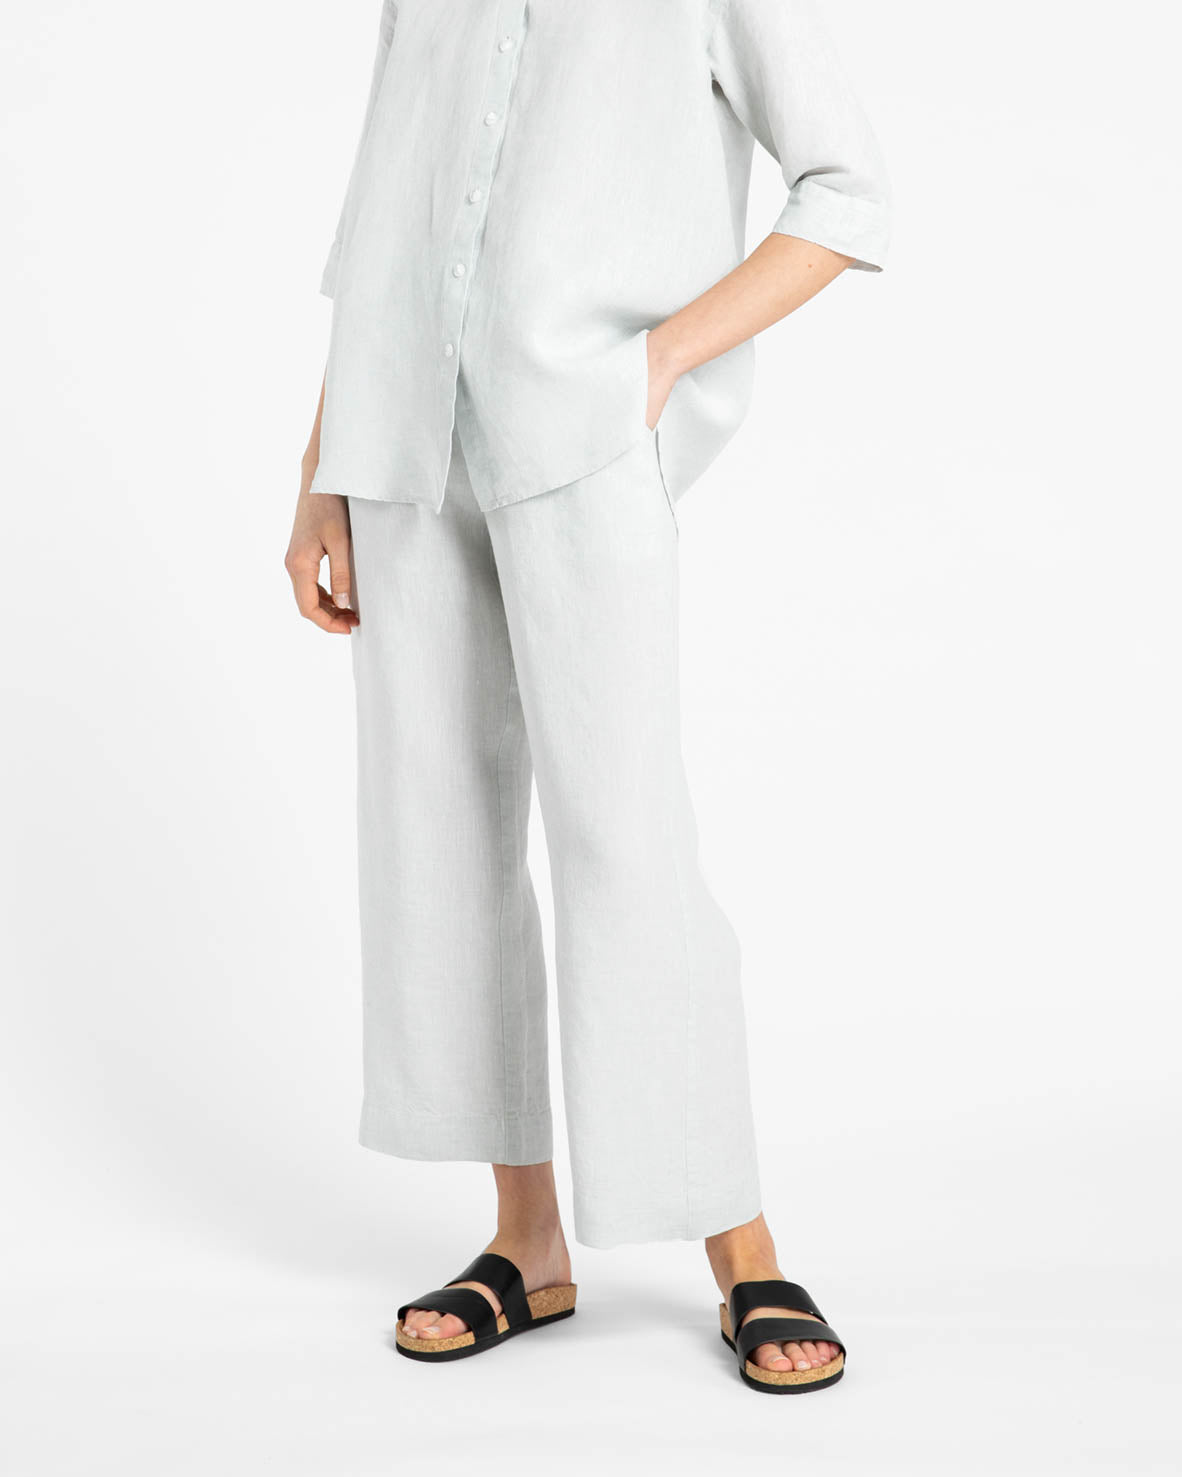 Kuusama Linen Pants, Light Grey. L & XL